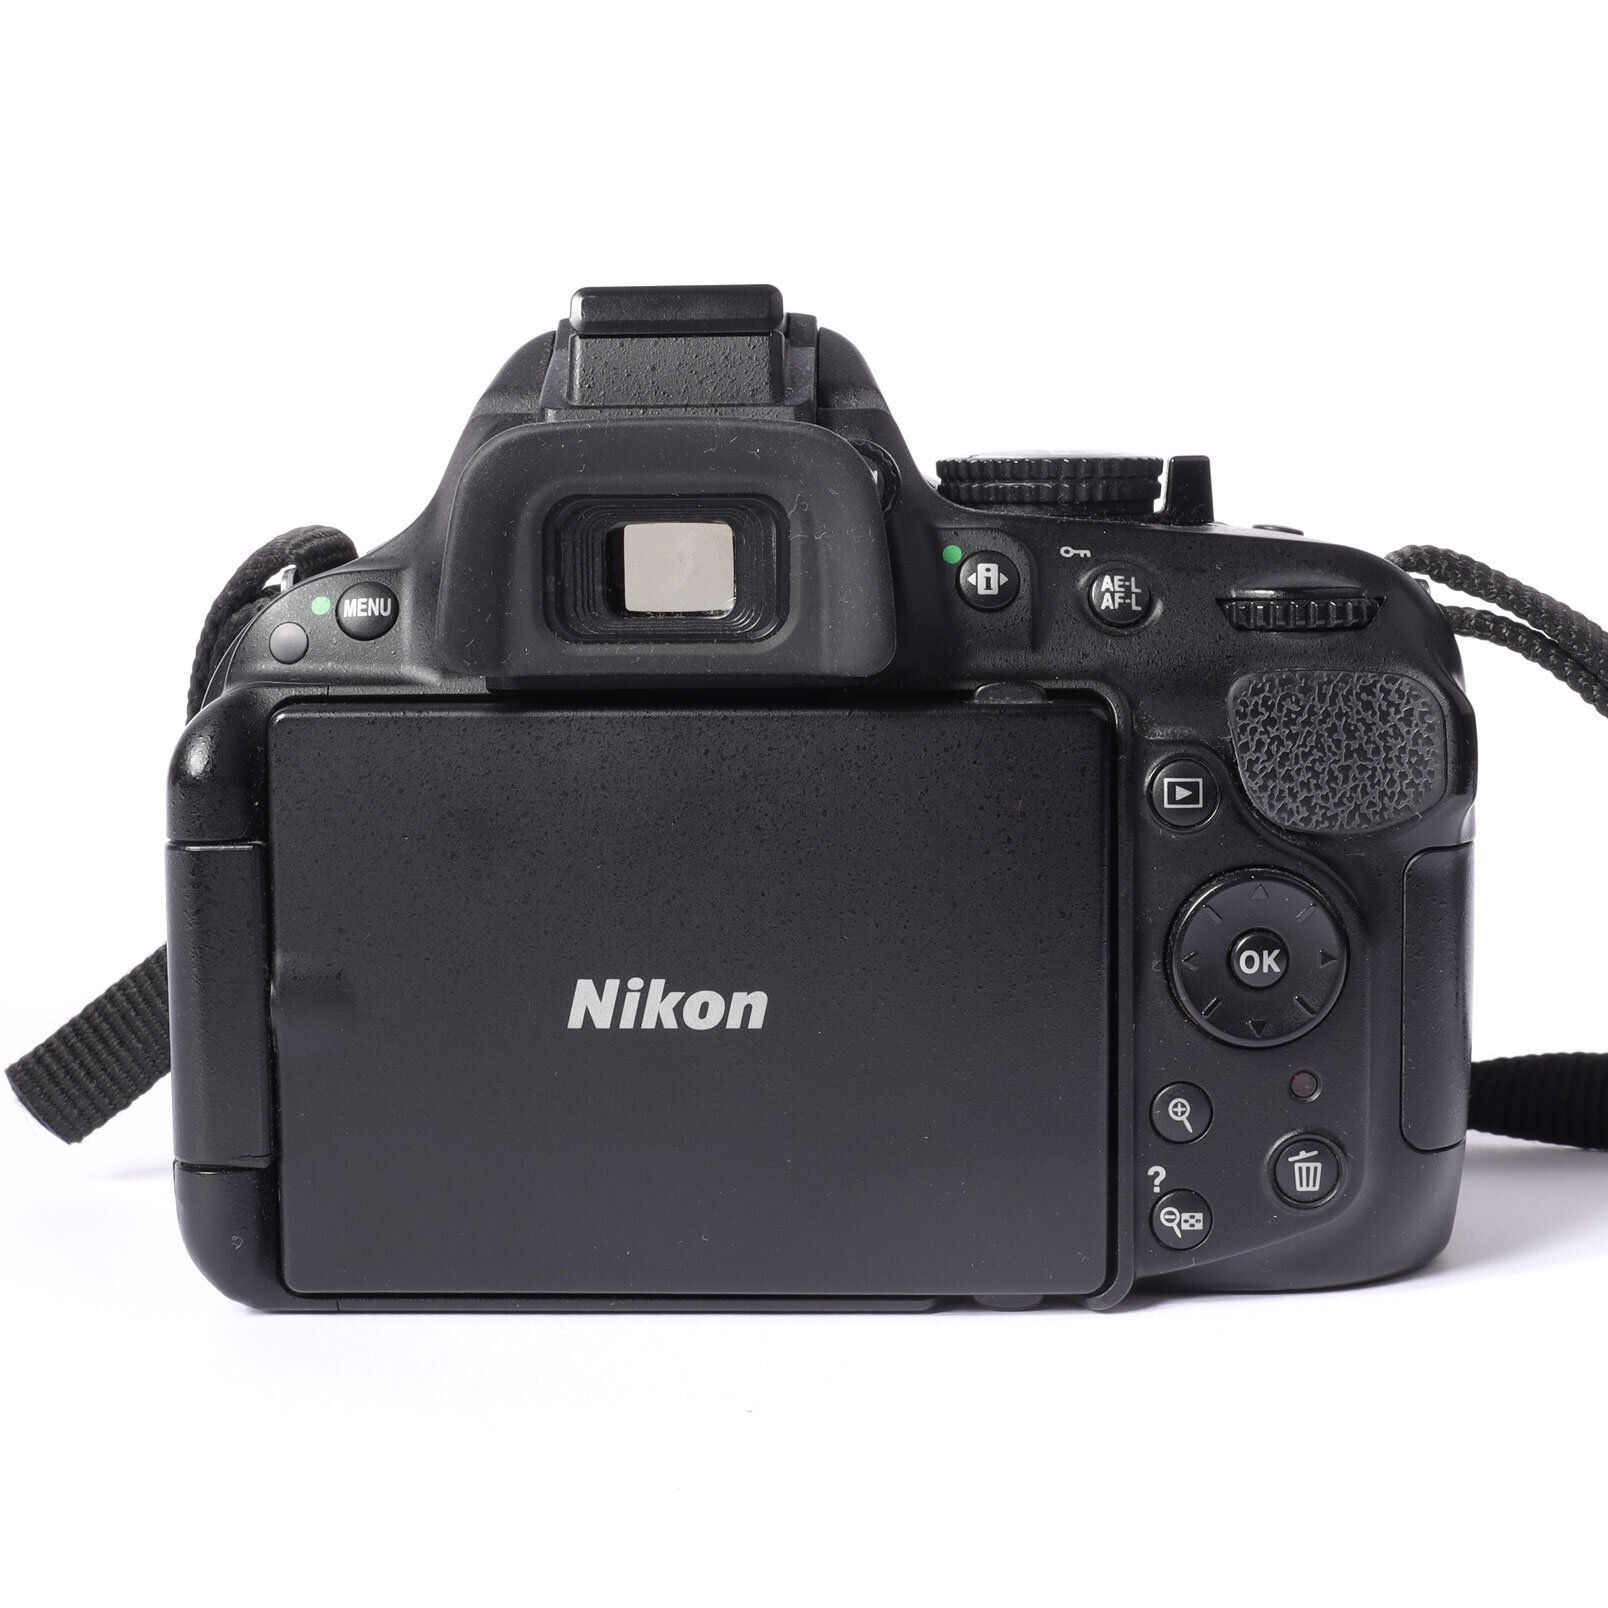 Nikon D5200 Gehäuse ca 26500 Auslösungen